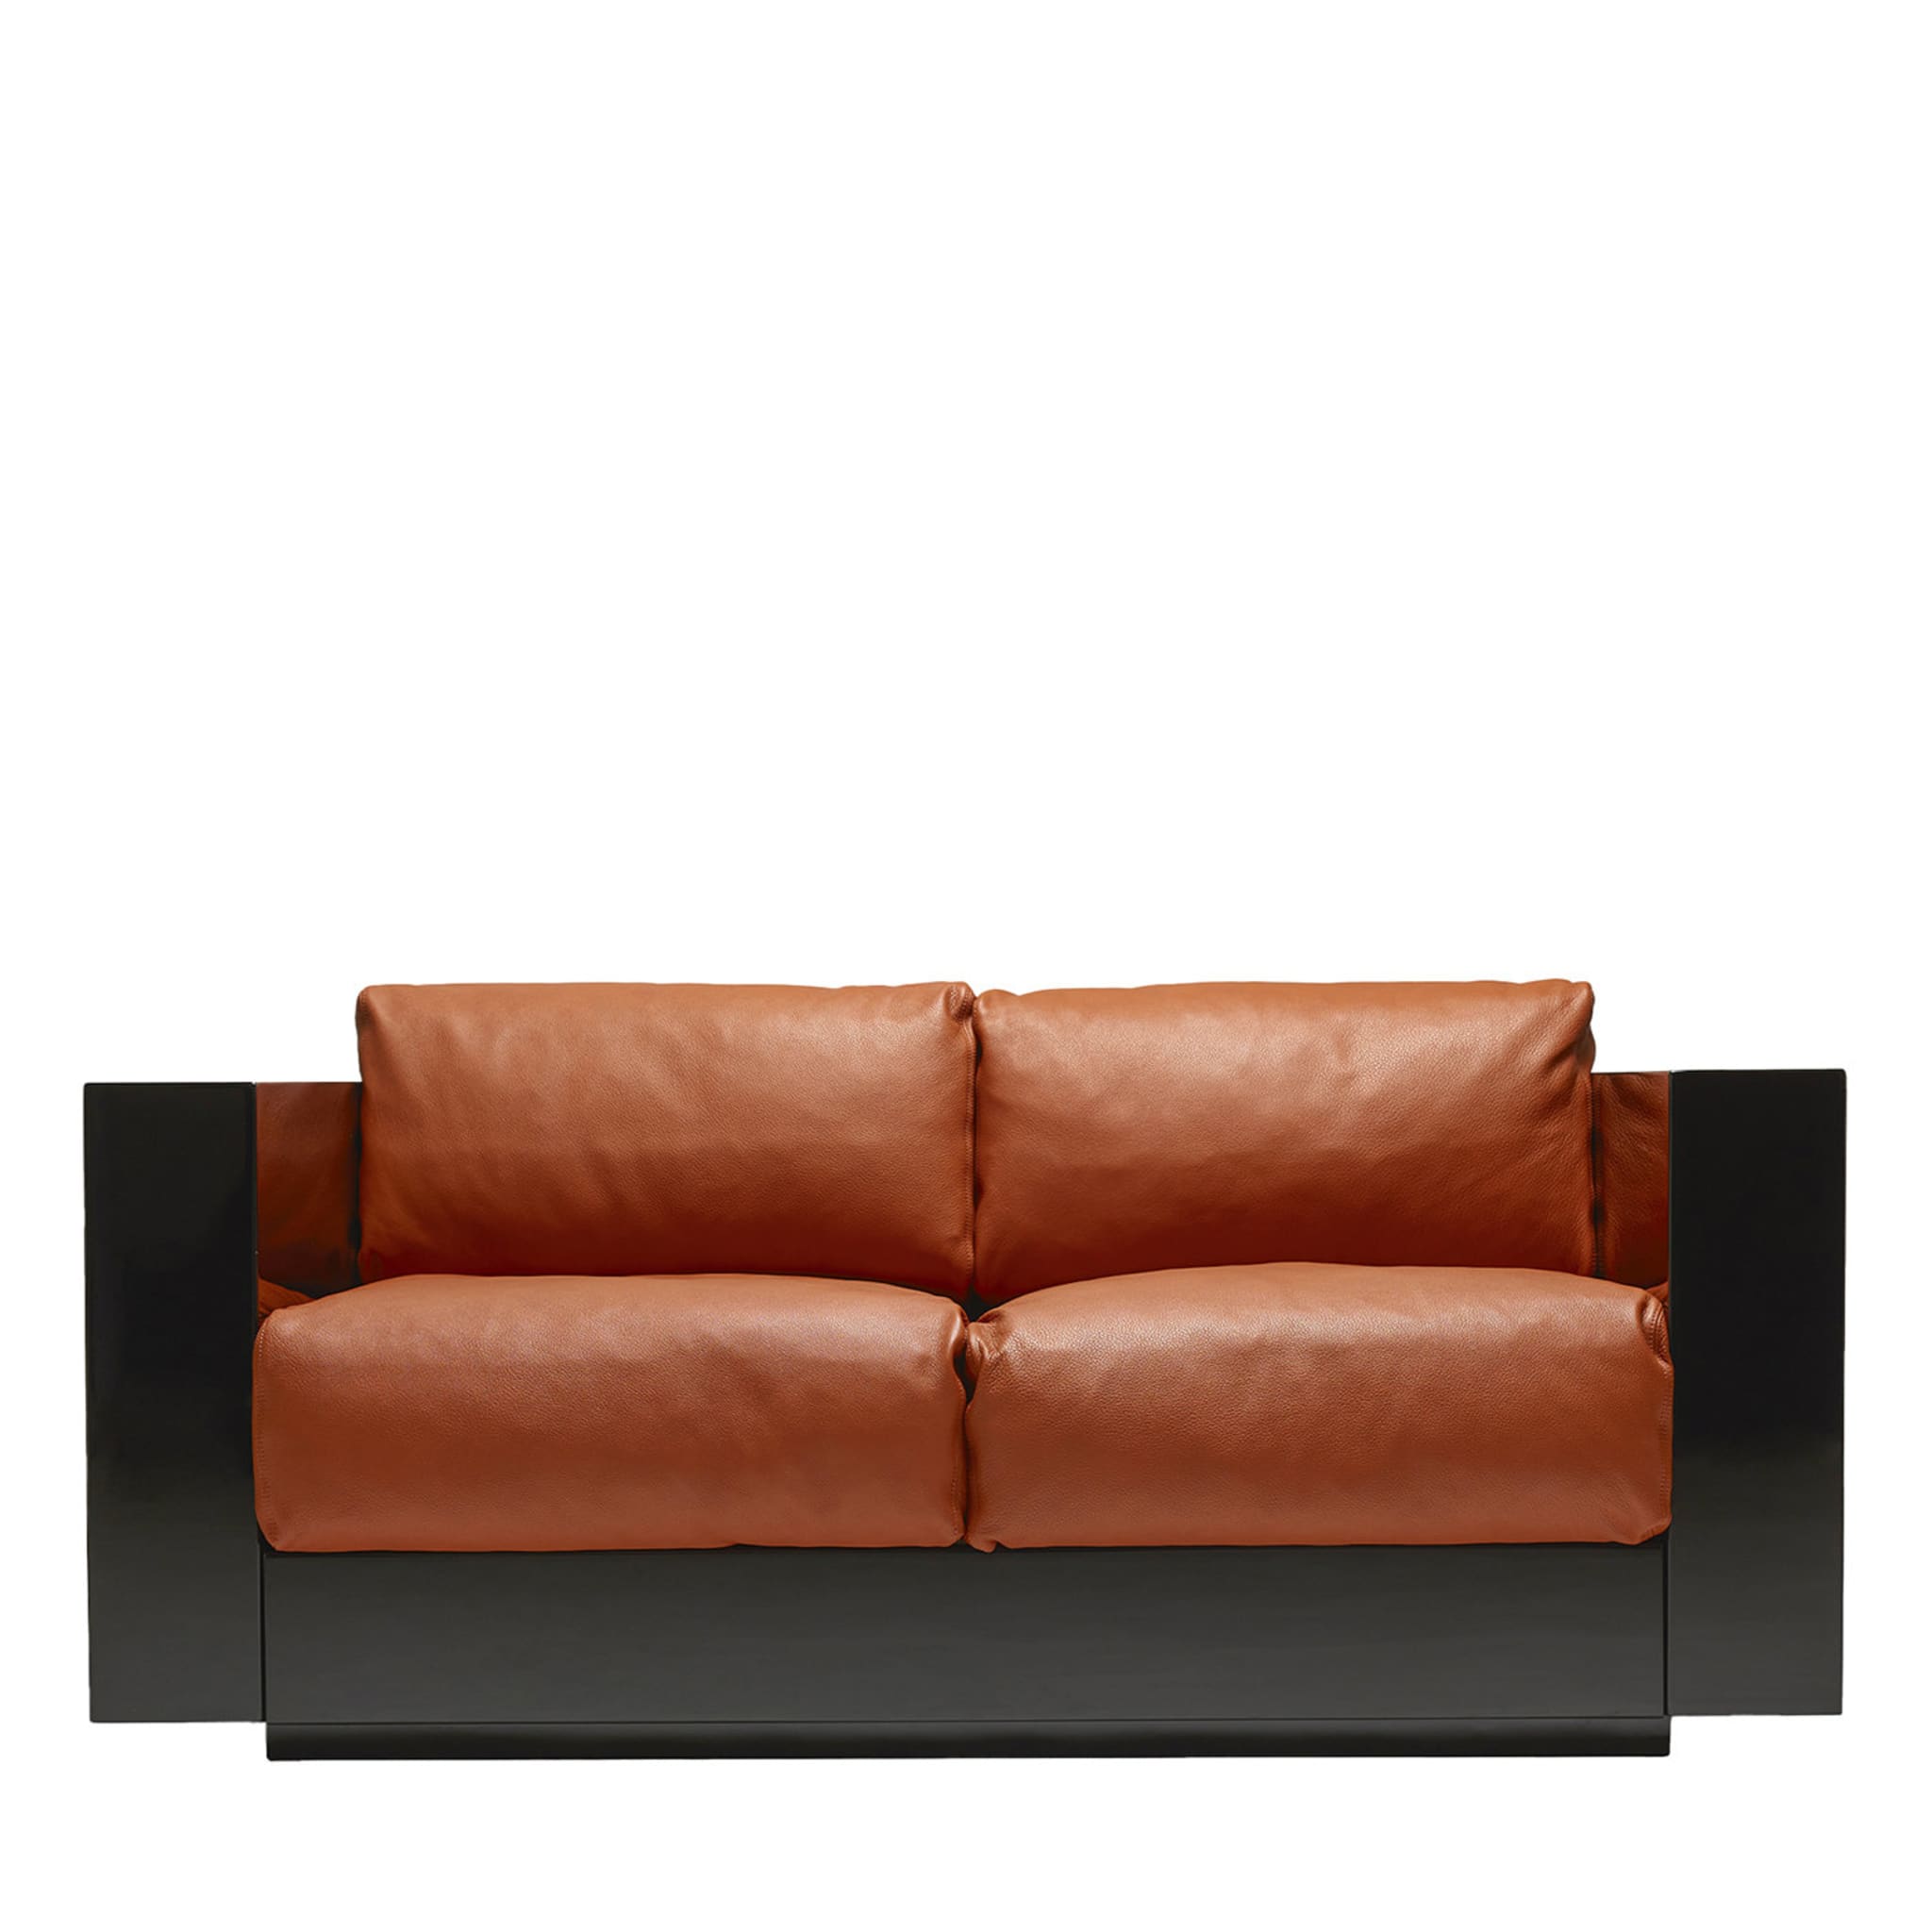 Saratoga Orange Sofa by Lella and Massimo Vignelli - Main view